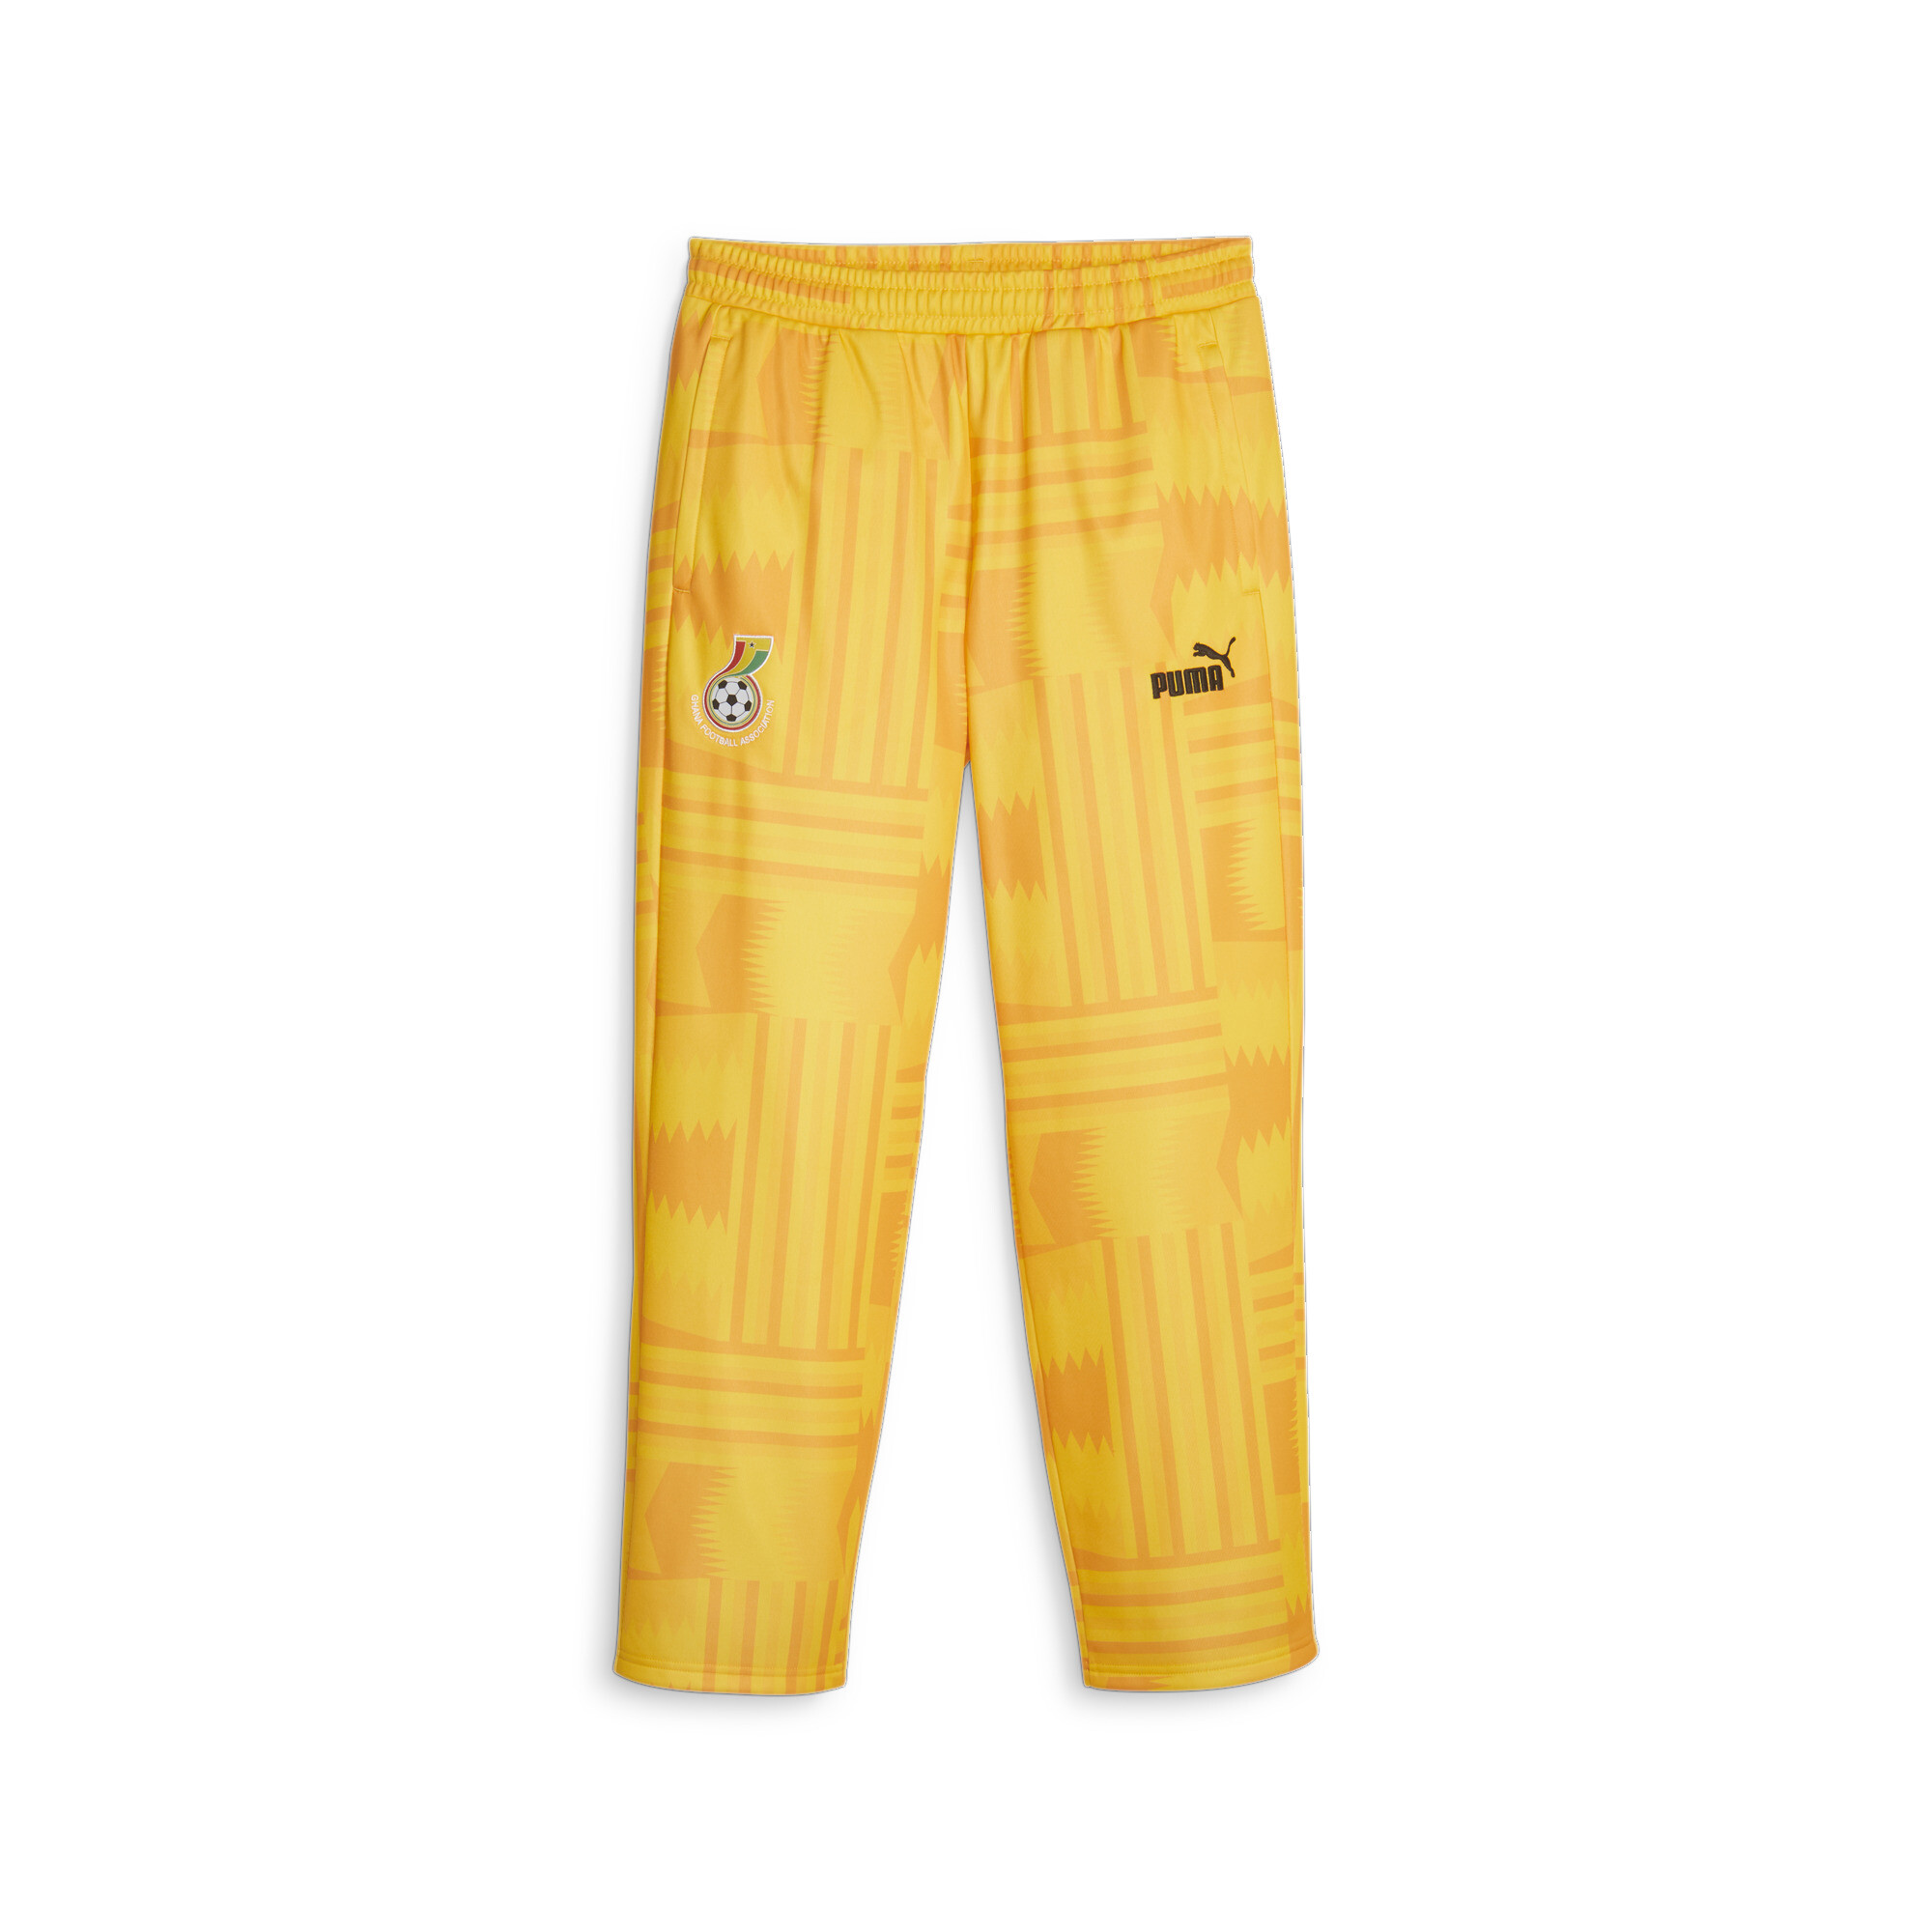 Men's PUMA Ghana FtblCulture Track Pants In Yellow, Size Medium